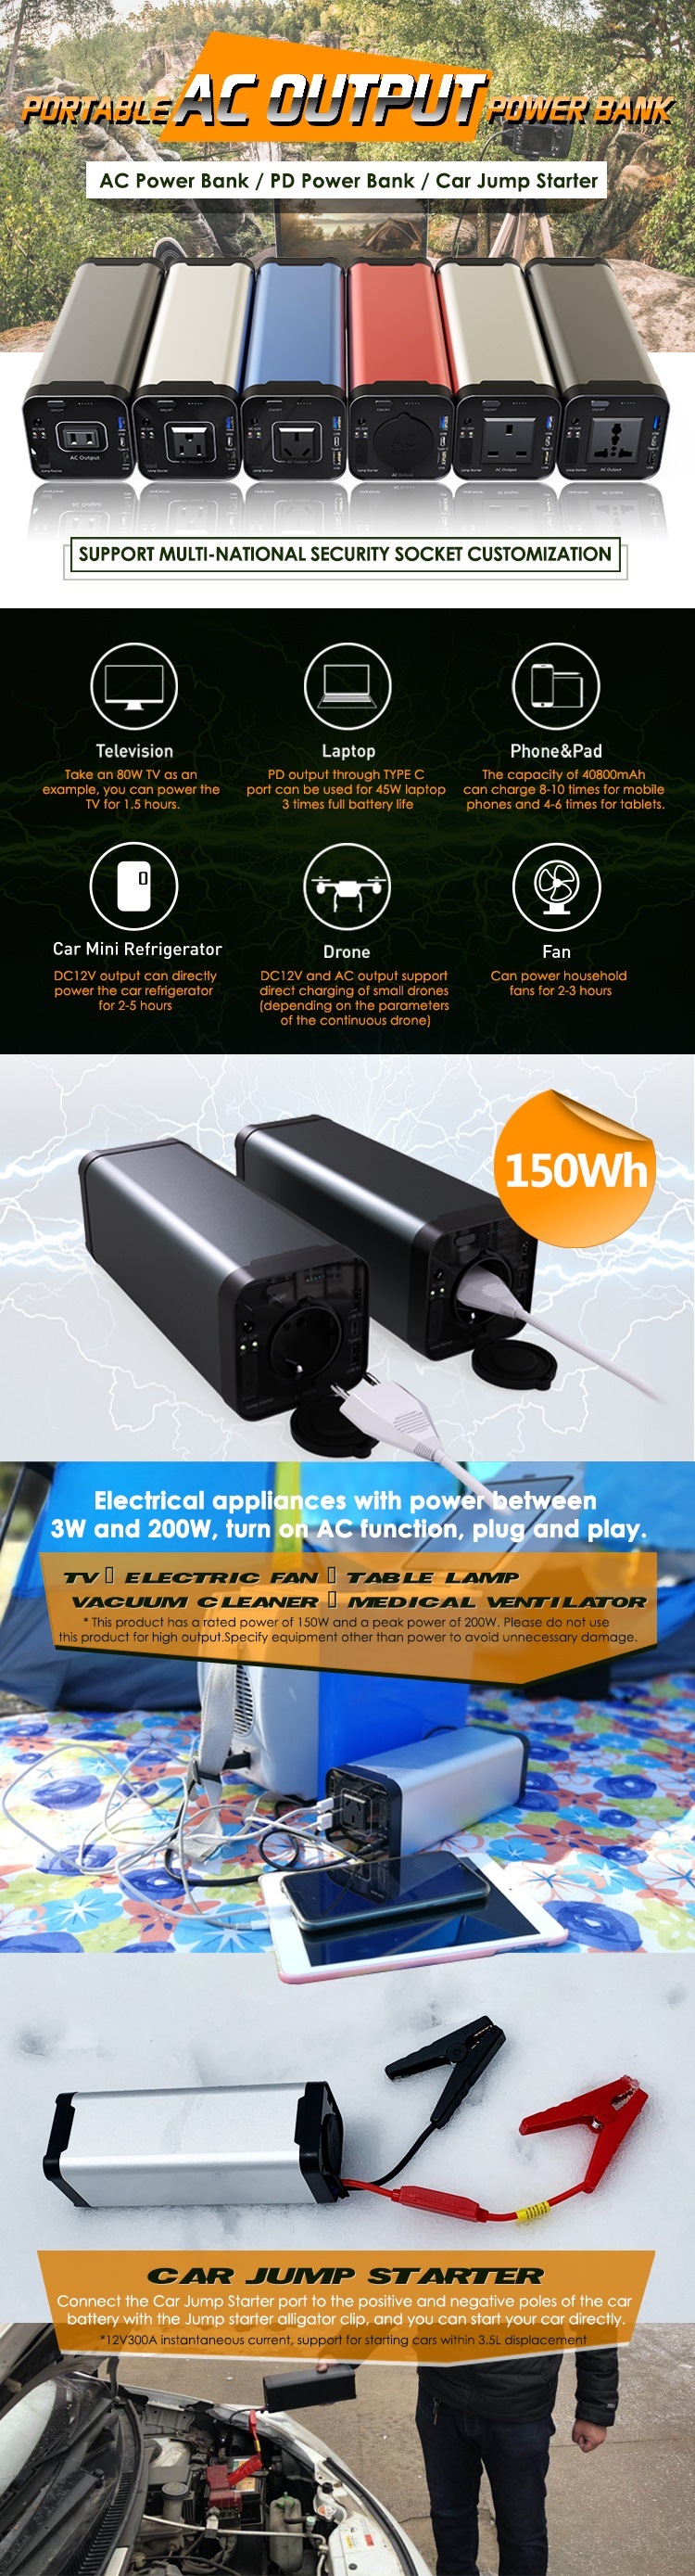 UE Plug 150W Portable Solar 12V DC Power Bank chargé de Solar / AC 220V Sortie / Voitures